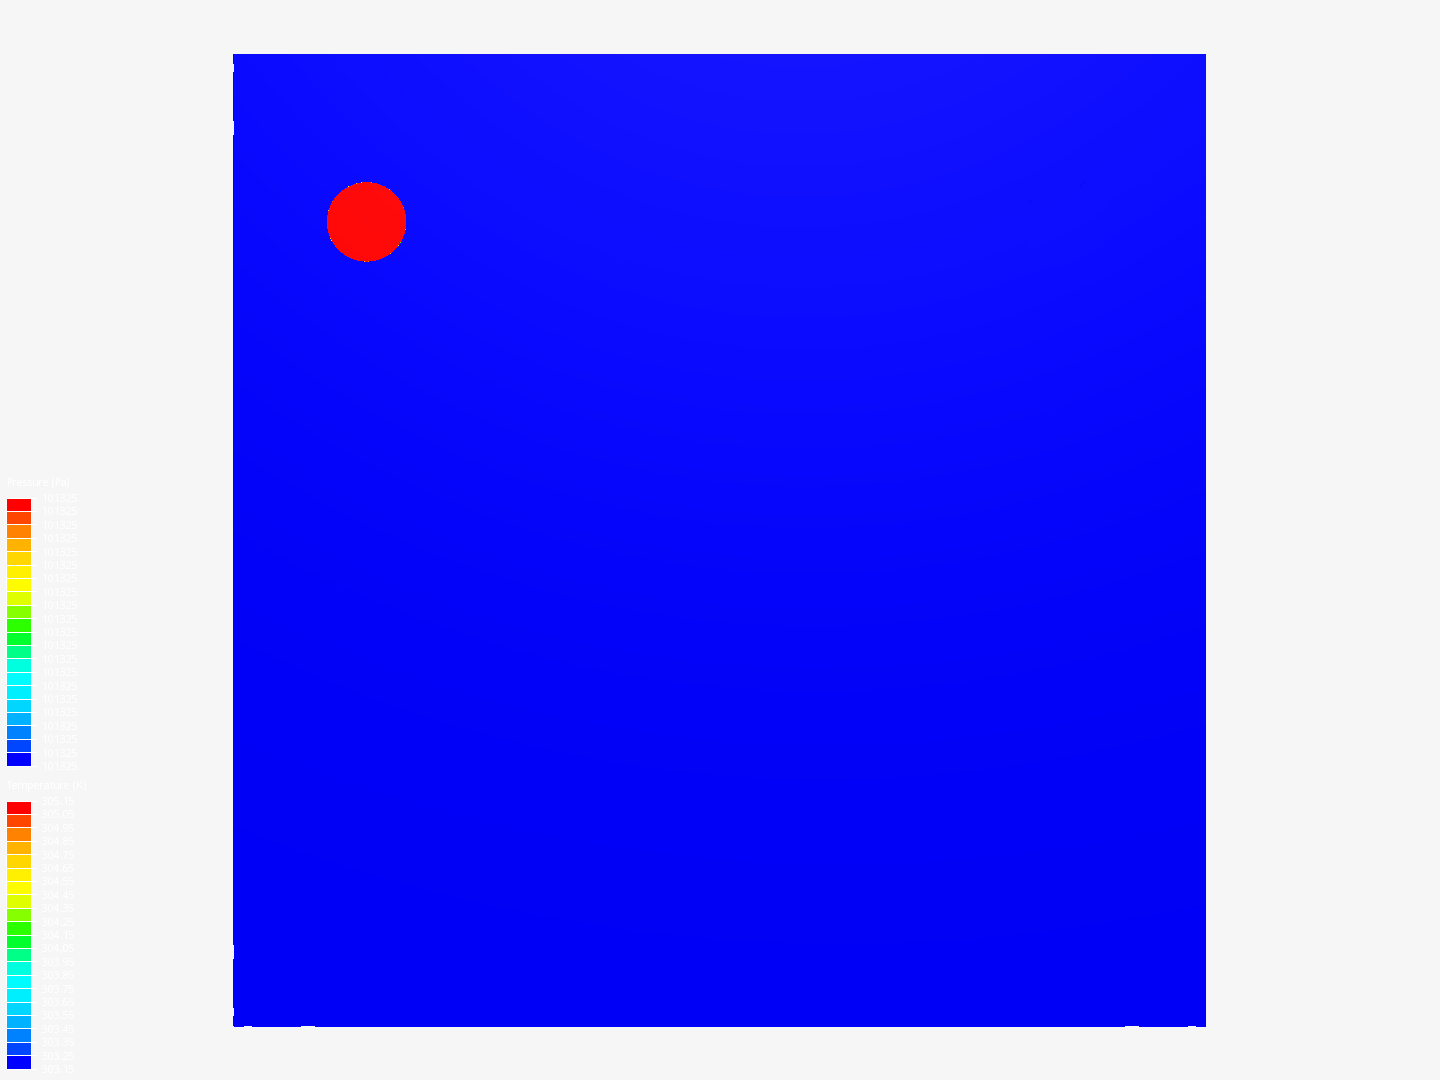 BTP_2 (Gyroid_simplest ) image